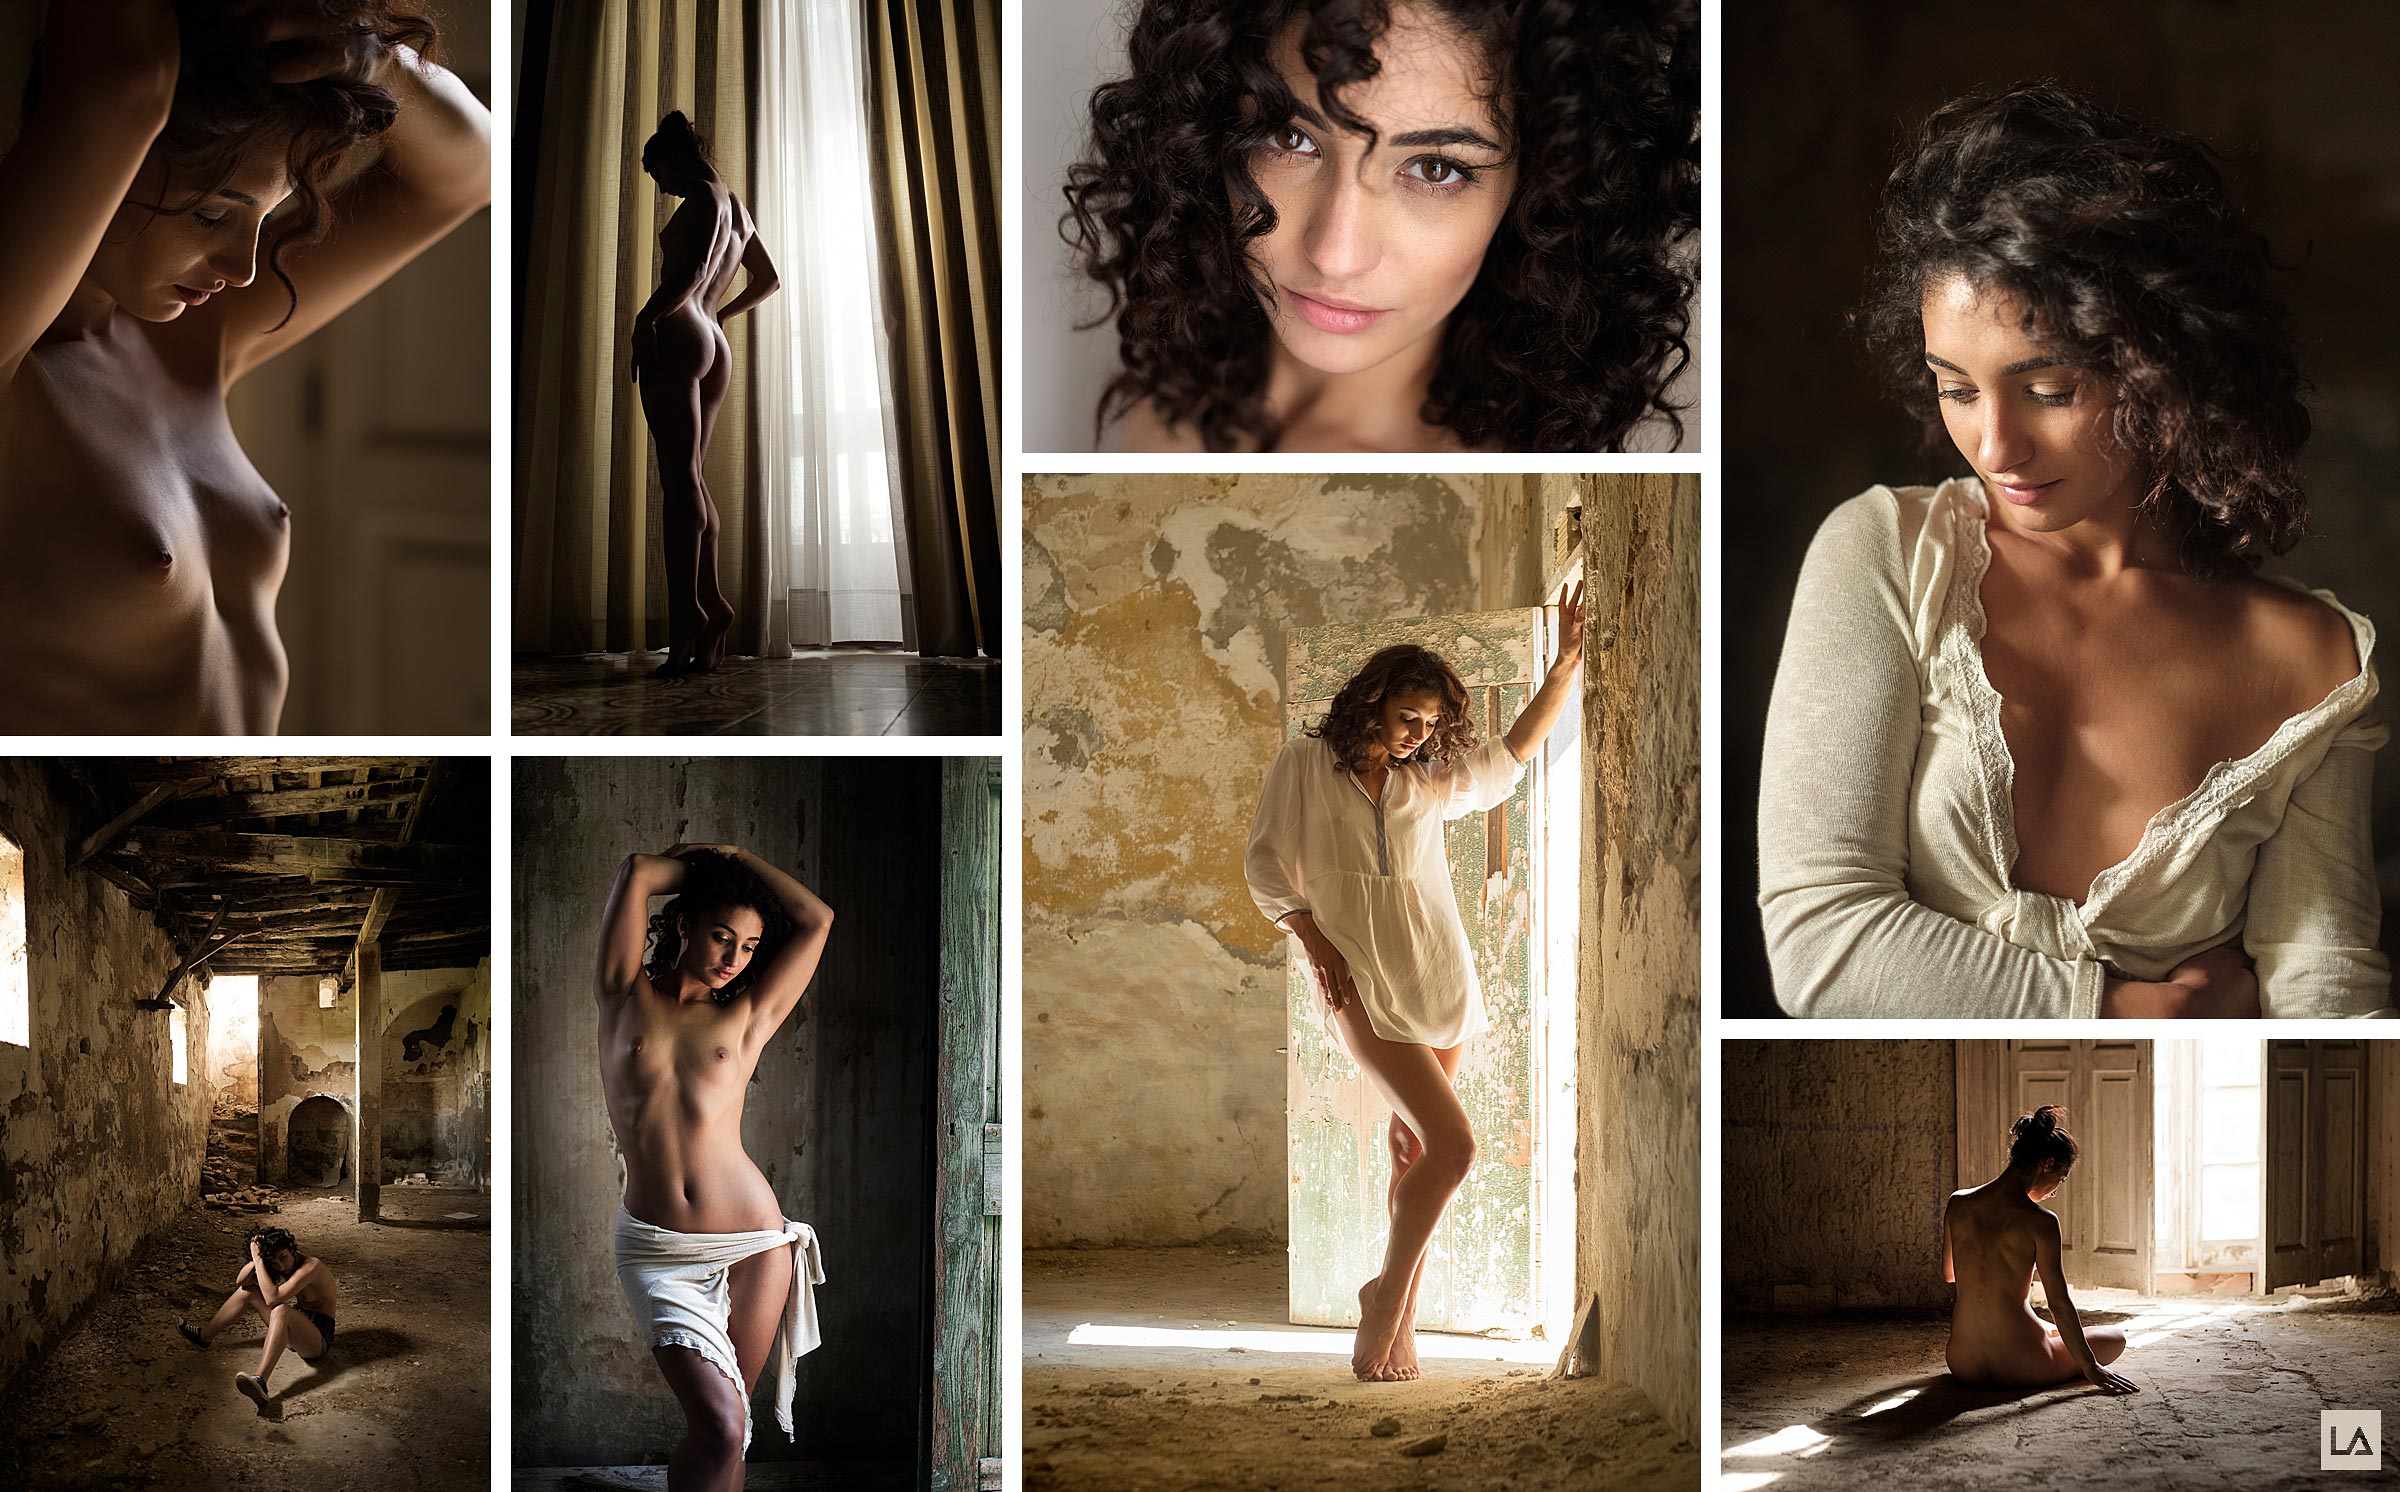 Martina Belacima in Tuscany shot by Damien Lovegrove